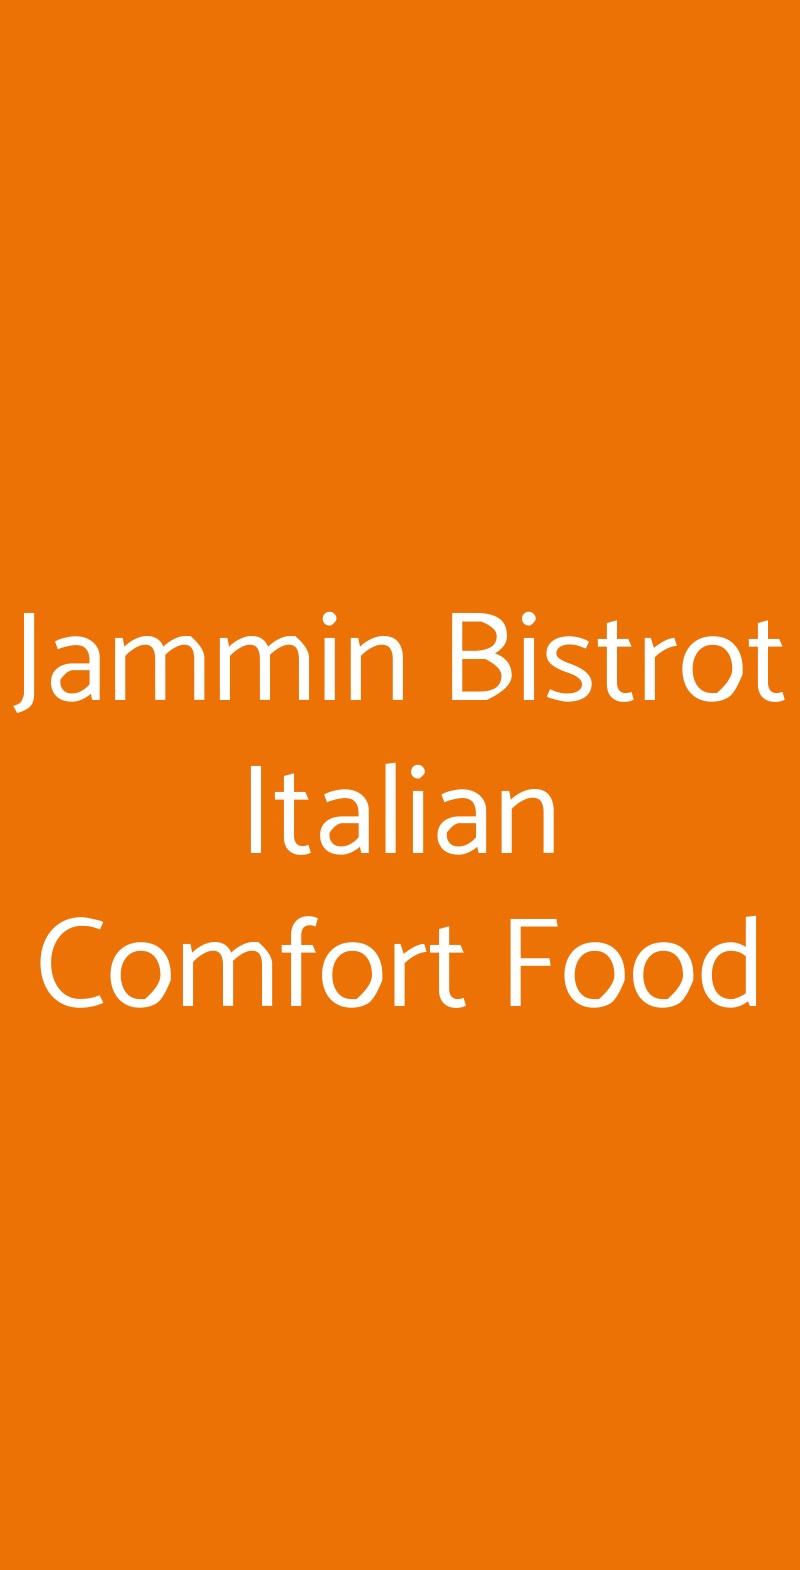 Jammin Bistrot Italian Comfort Food Napoli menù 1 pagina